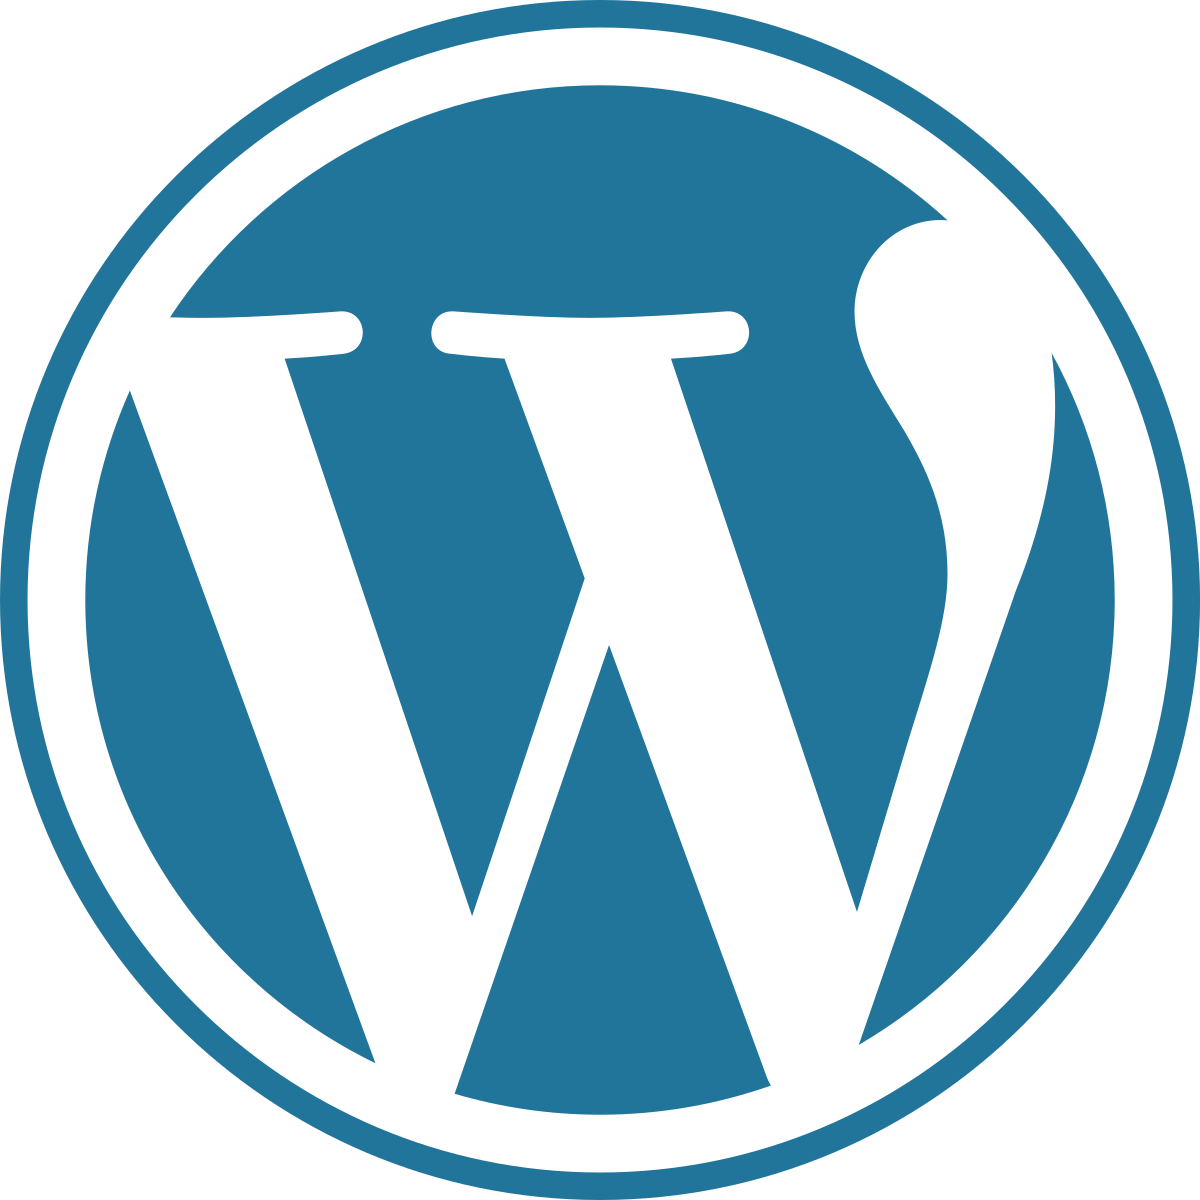 WordPress.com - Wikipedia